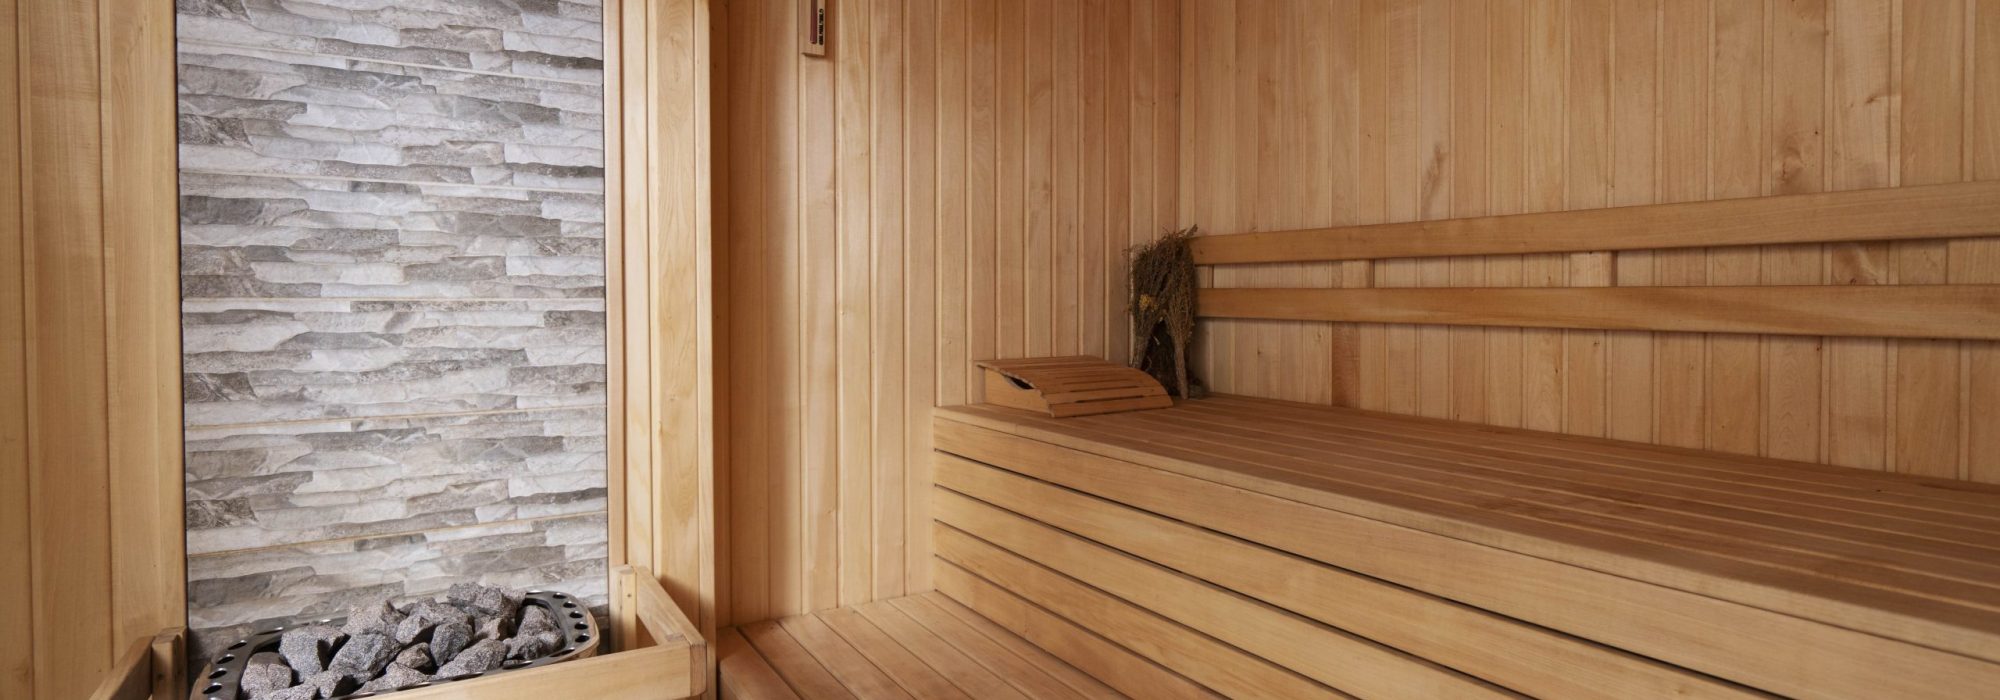 clean-empty-sauna-room-min